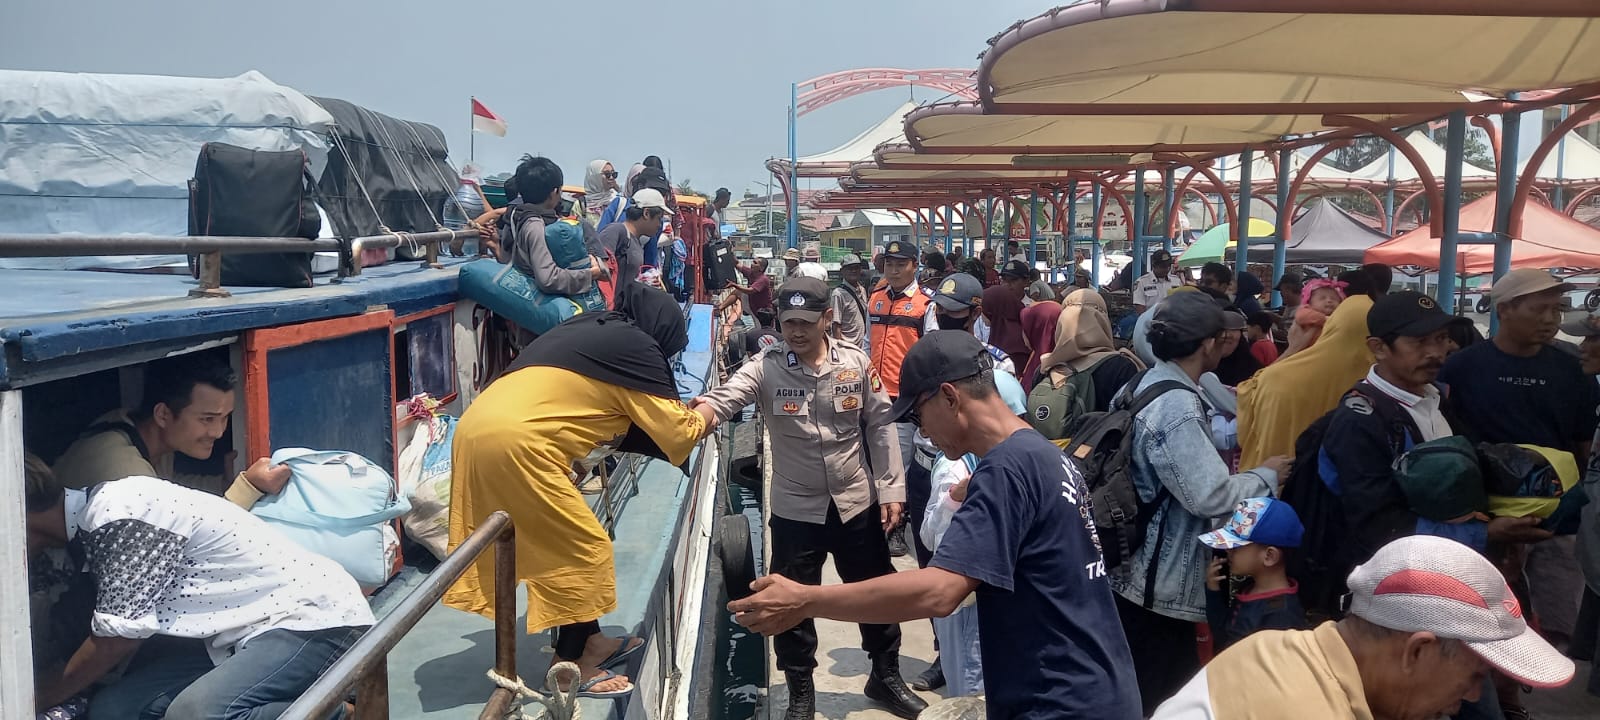 Polsek Kepulauan Seribu Utara Berikan Pelayanan dan Pengamanan di Dermaga Utama Pulau Kelapa untuk Suasana Aman dan Humanis